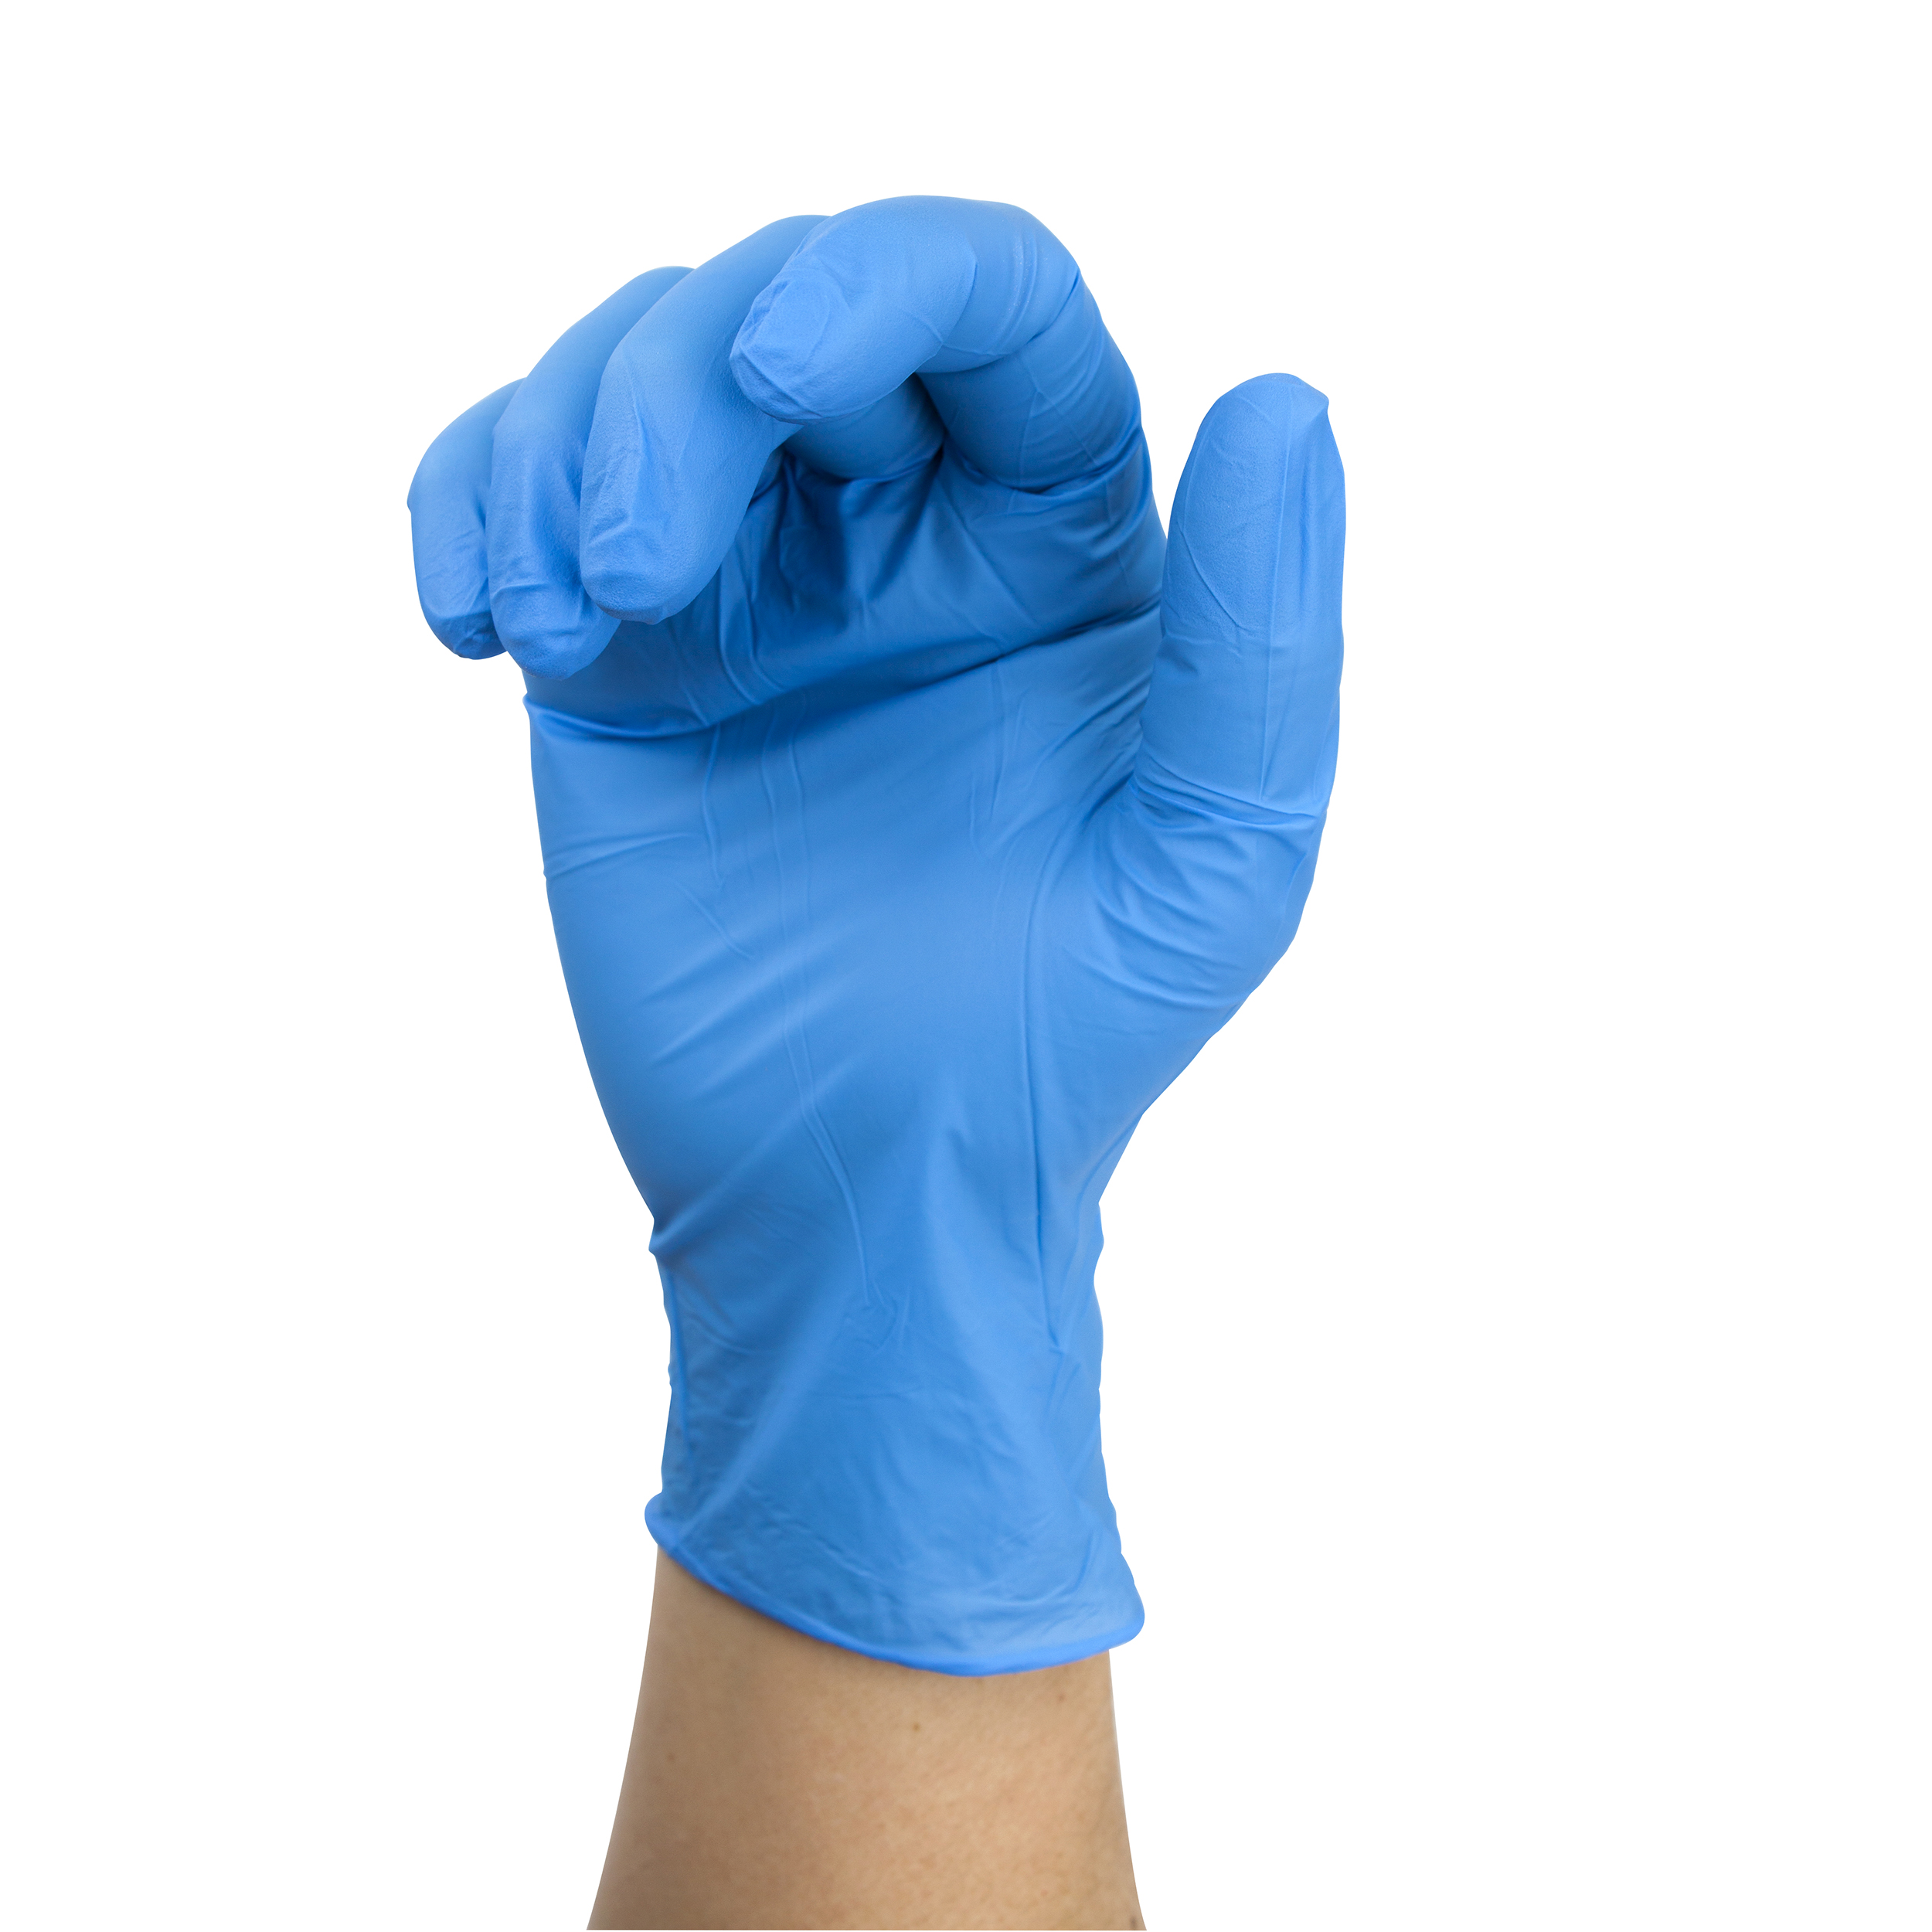 Nitrile Exam Glove (Non-latex) Powder Free - M - Blue - 1000 Pairs